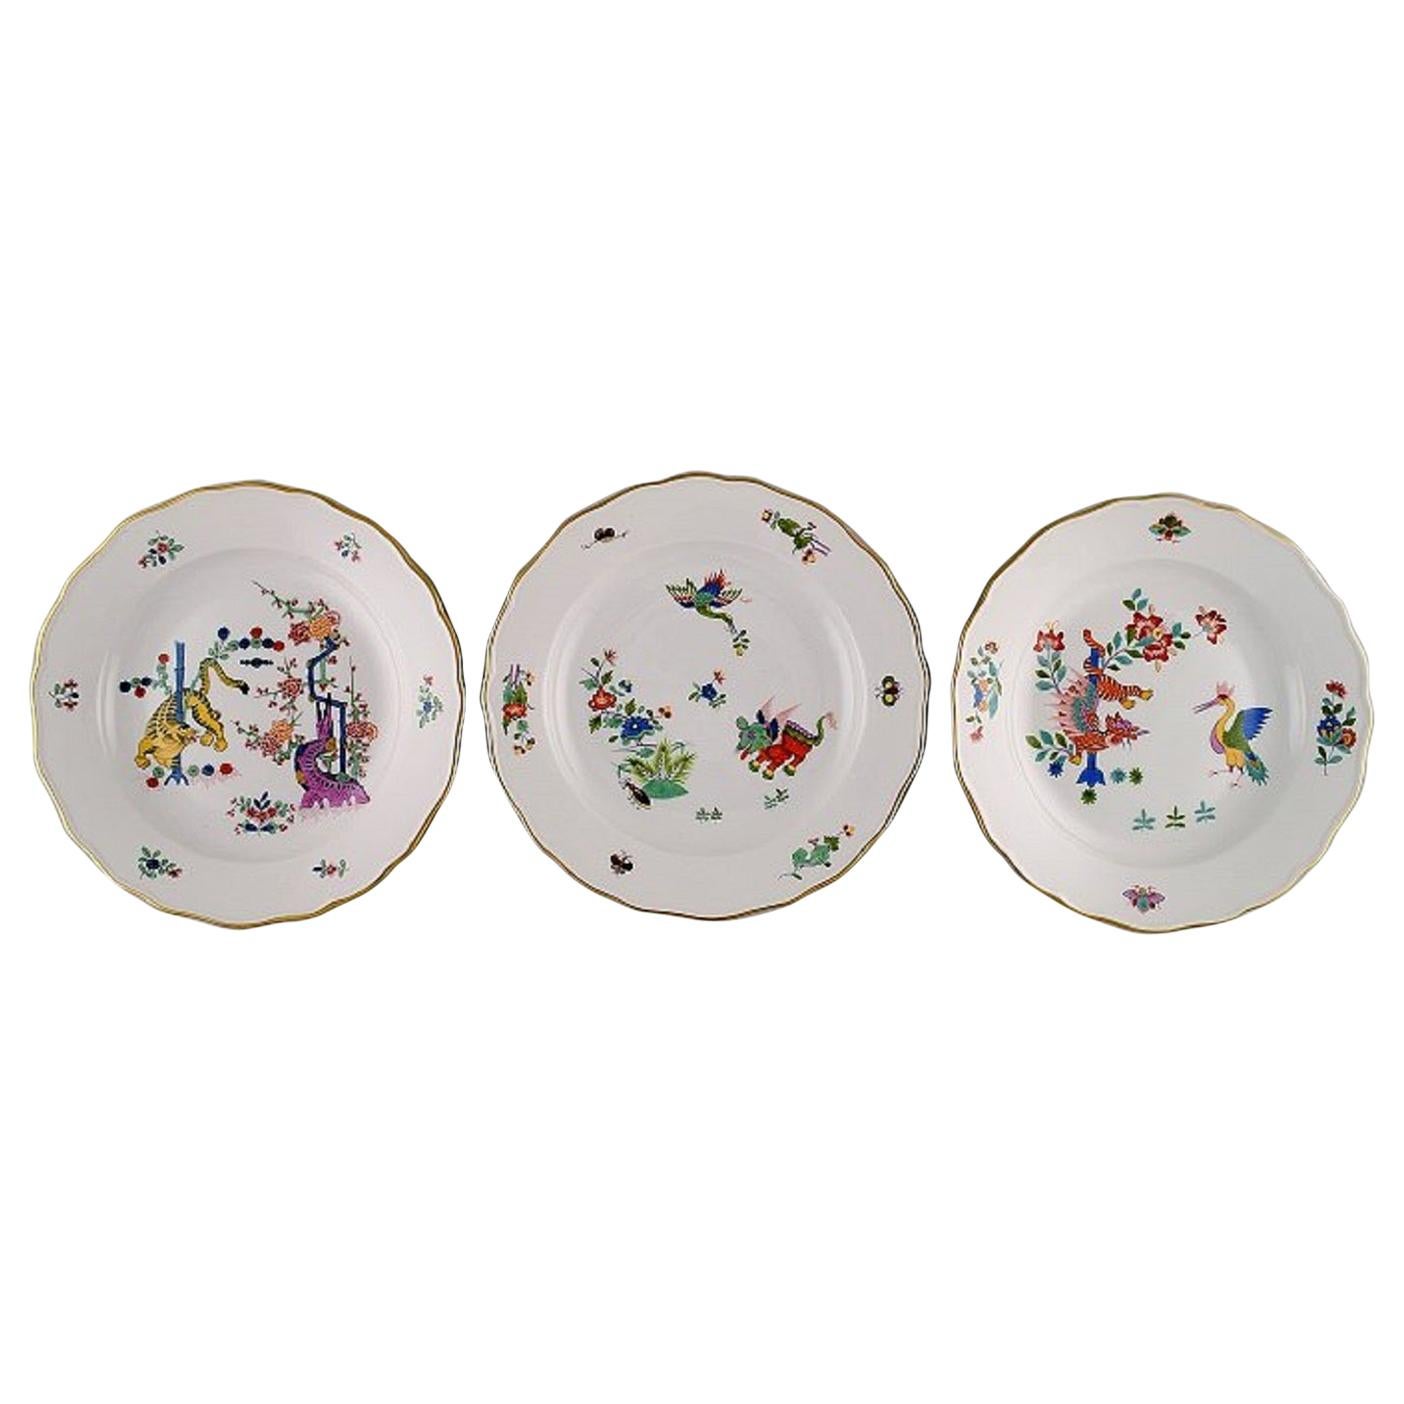 Three "Kakiemon" Meissen Plates Decorated with Japanese Motifs, circa 1900